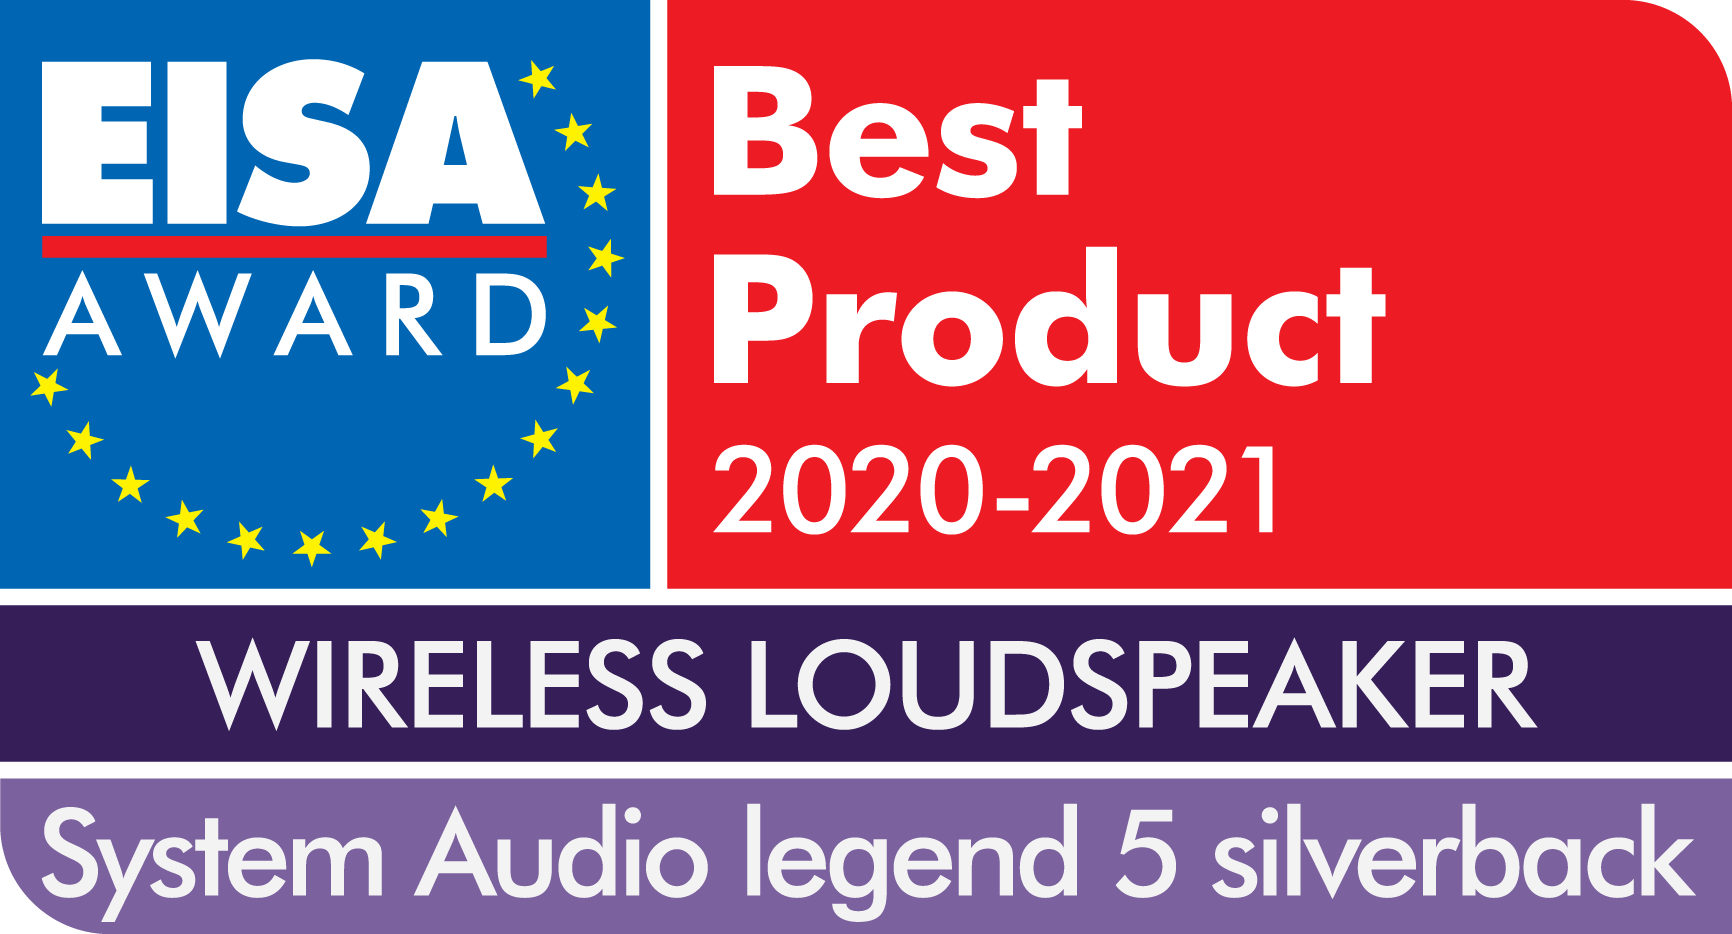 Eisa Awards System Audio Legend 5 Silverback